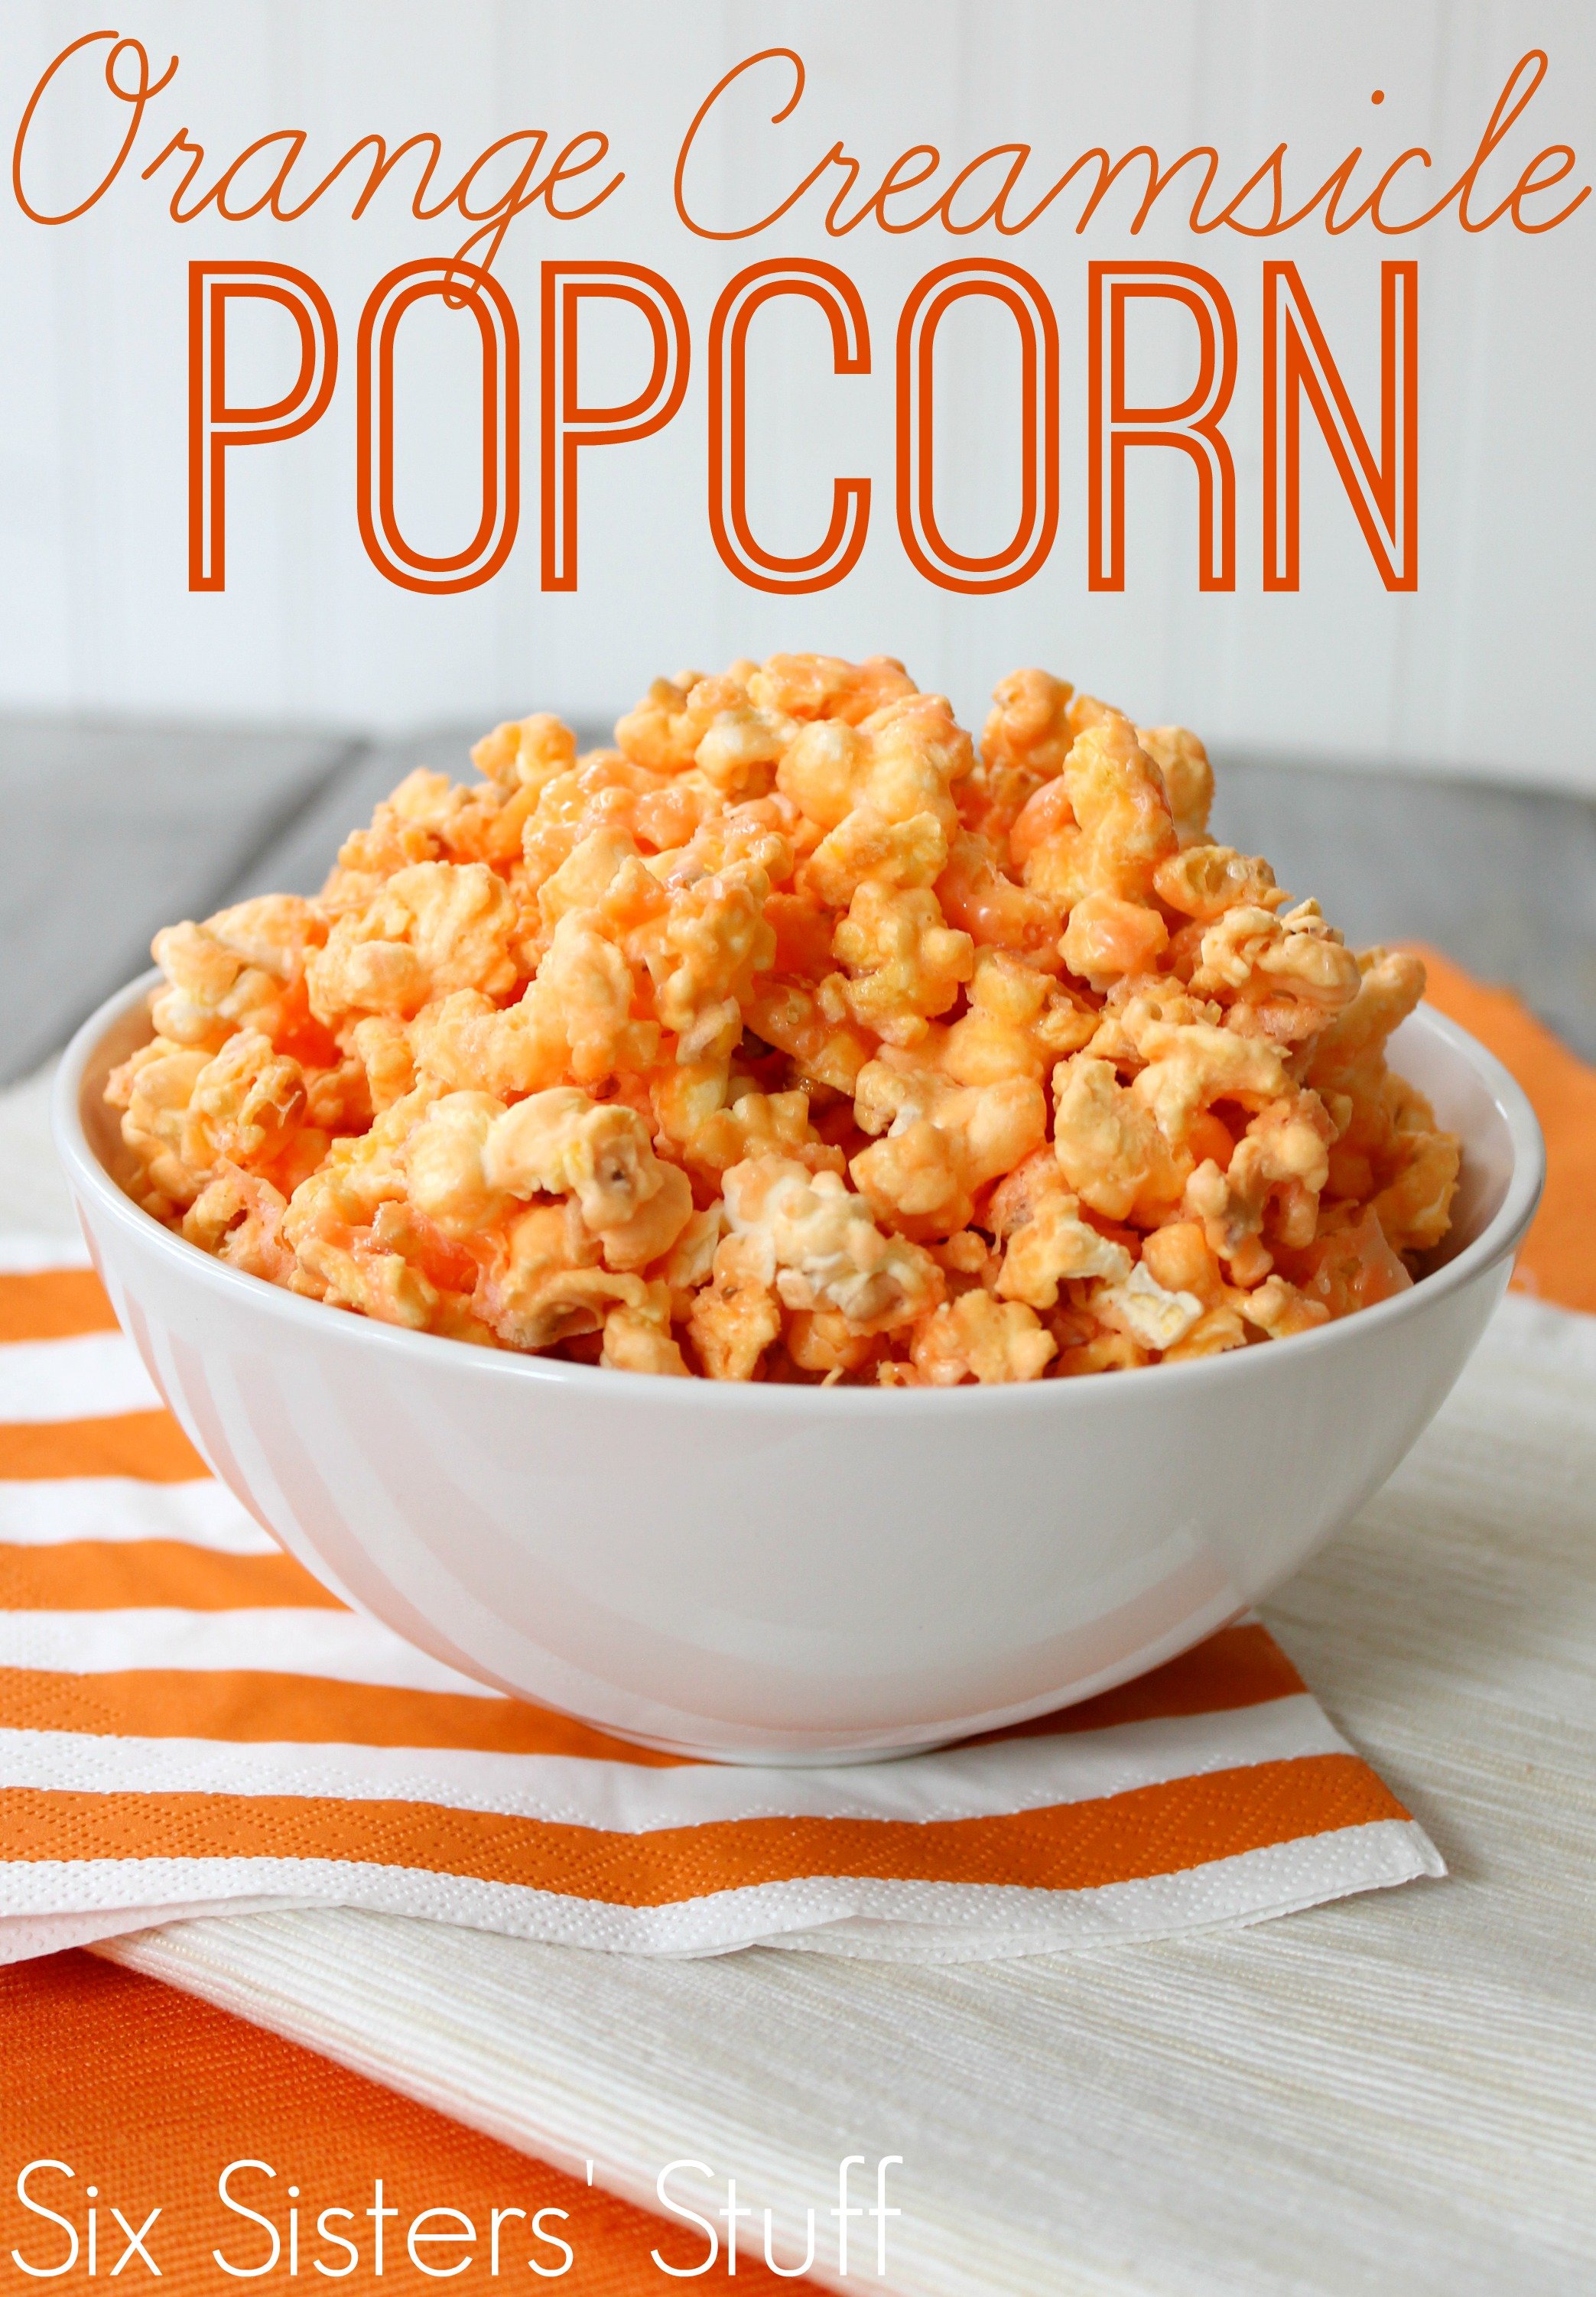 Orange Creamsicle Popcorn Recipe